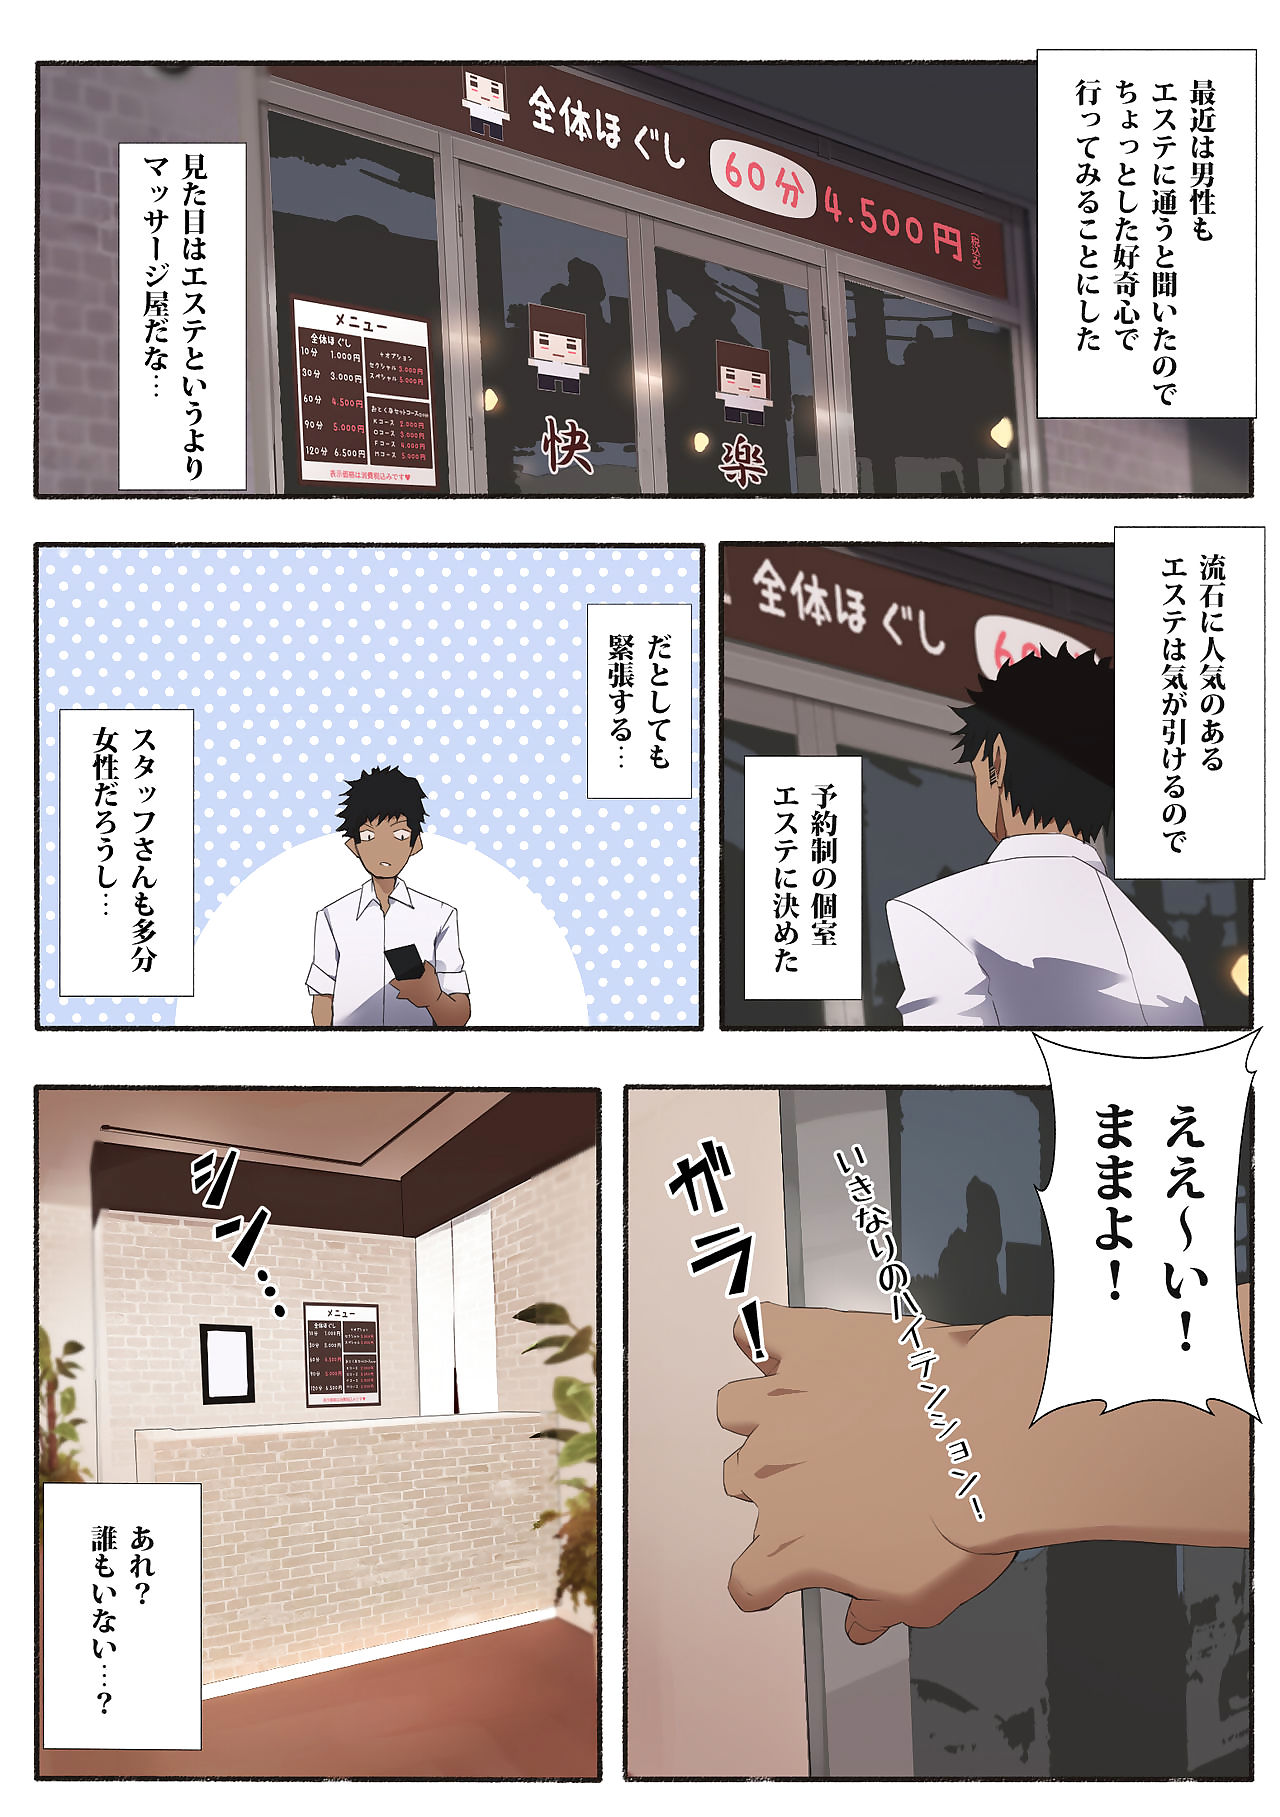 jap. Hataraku oneesan - Erotische Salon page 1